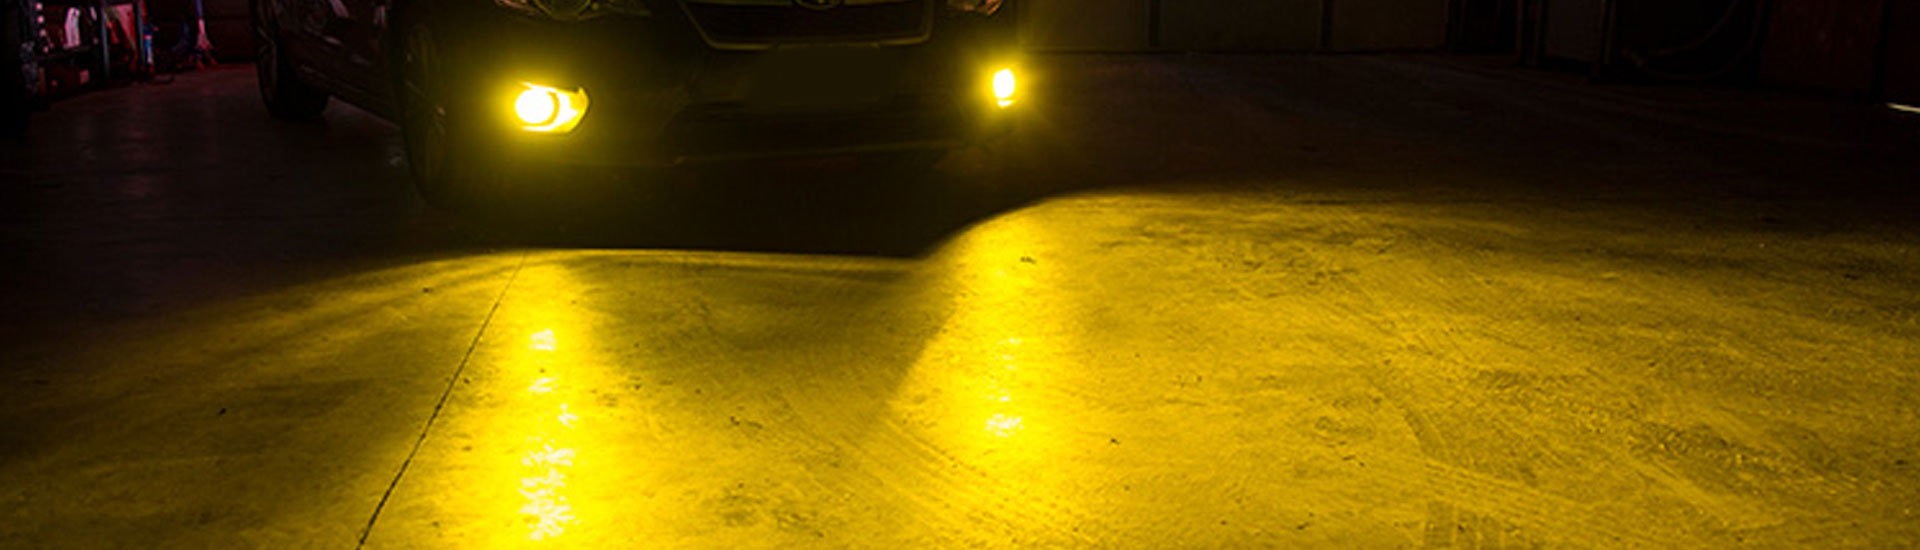 Dodge Neon Fog Light Tint Covers